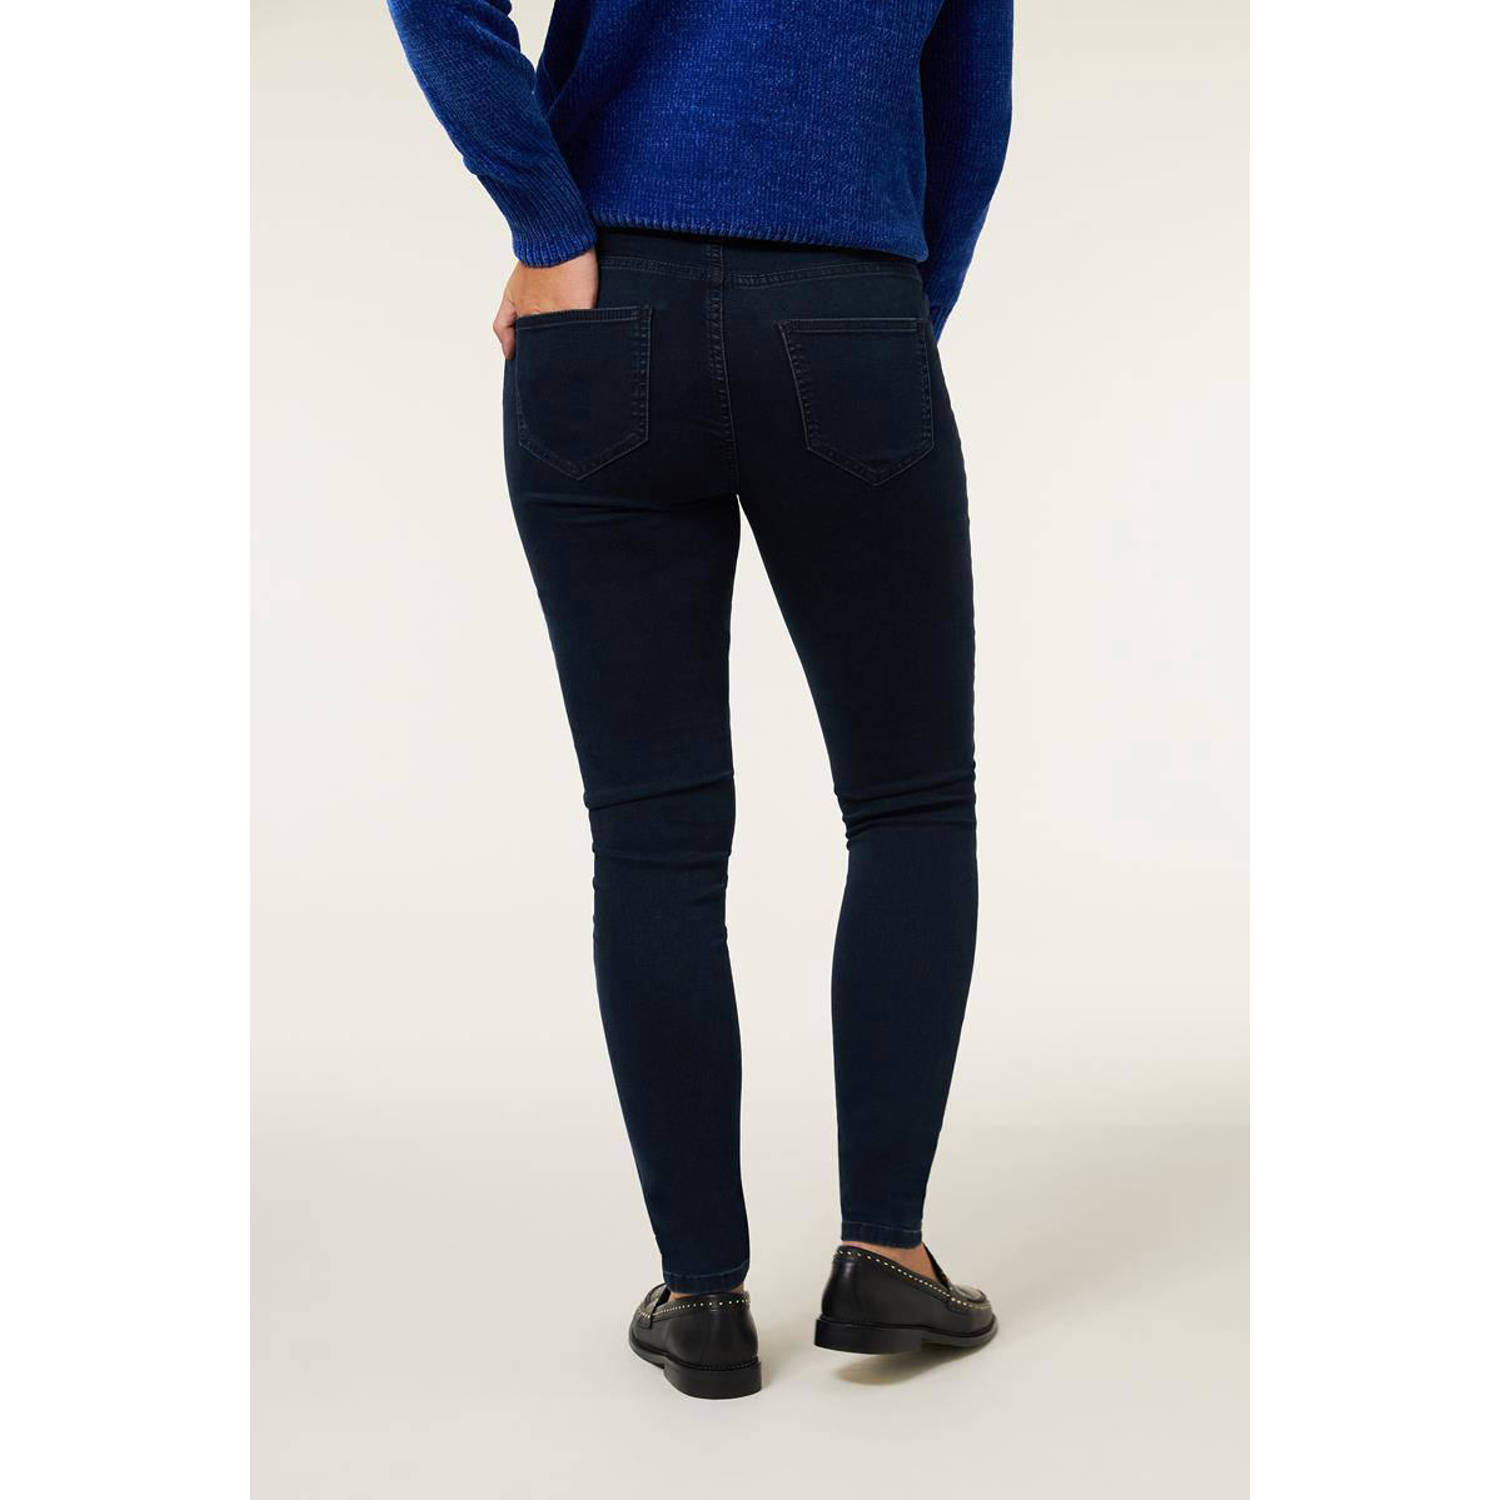 Miss Etam Regulier high waist skinny jeans Hanna dark blue denim